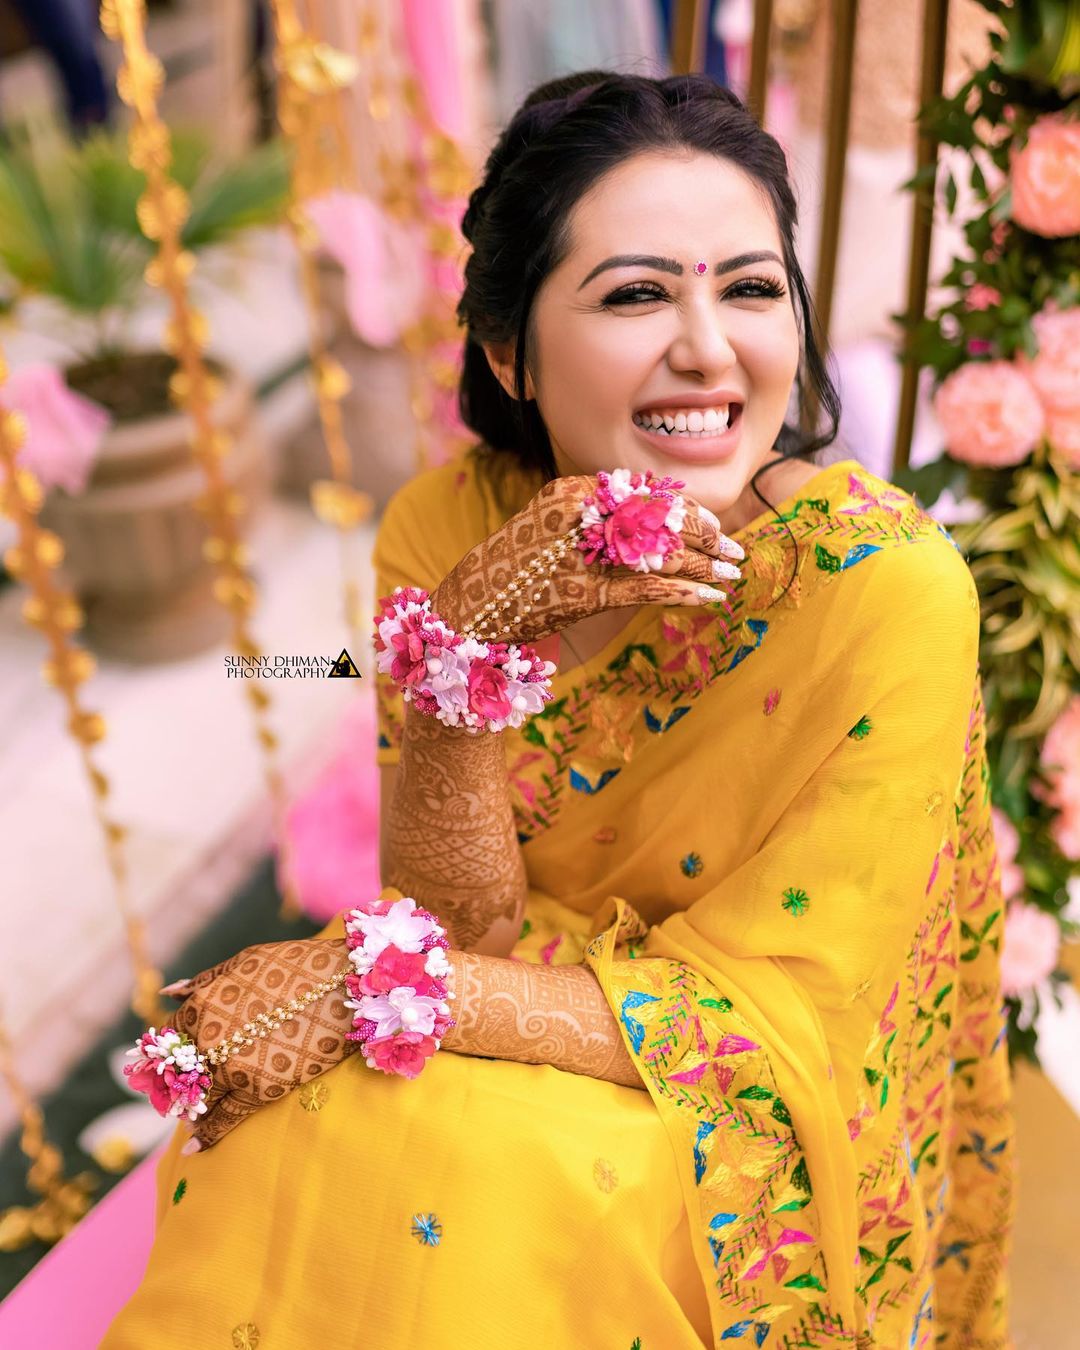 Indian tv actresses bridal look,टीवी की 10 खूबसूरत ऐक्ट्रेसेस के रियल लाइफ  ब्राइडल लुक - lifestyle 10 indian tv actresses and their real life bridal  look - Navbharat Times